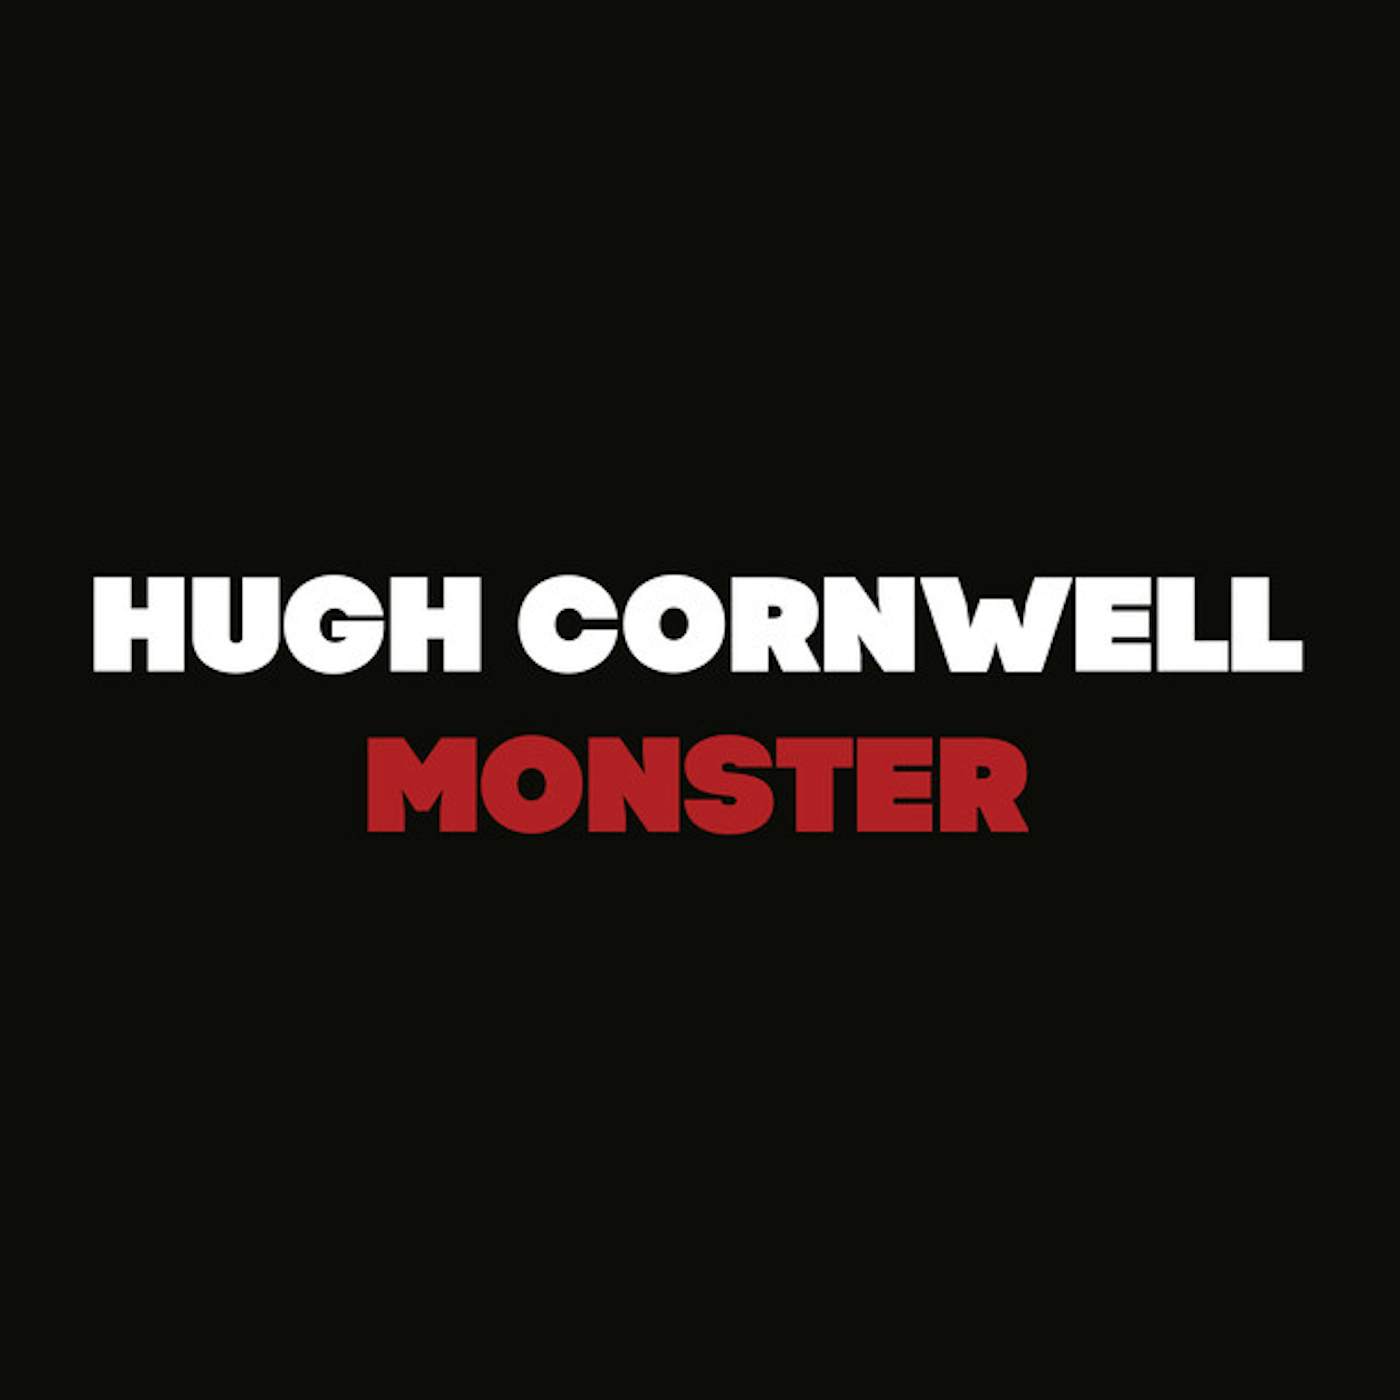 Hugh Cornwell 38698 Monster Vinyl Record